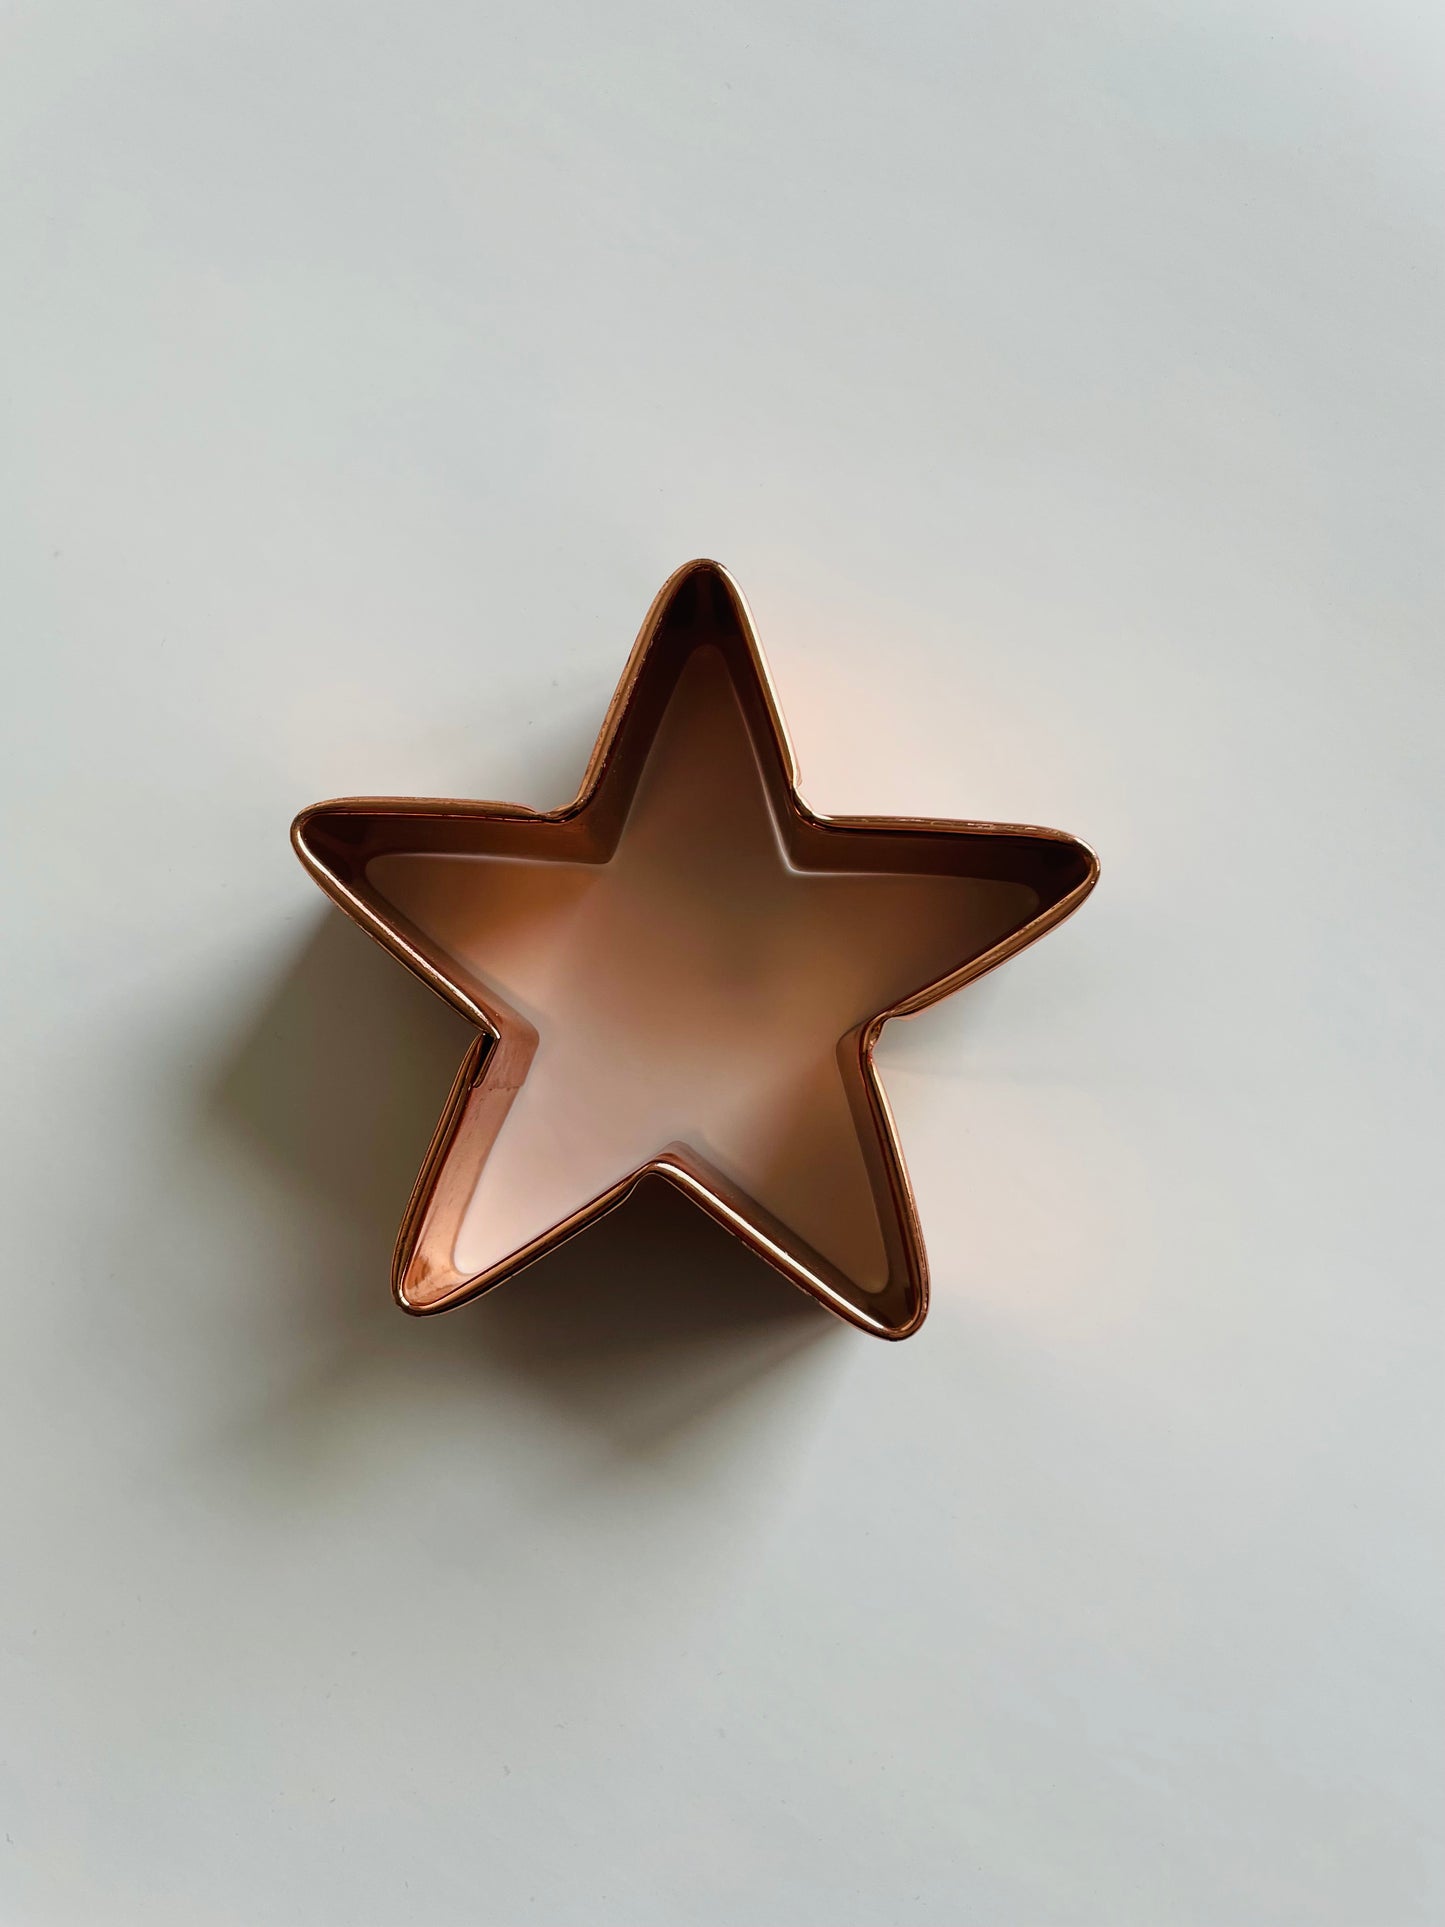 Vintage Cookie Cutter - Copper Star Shape